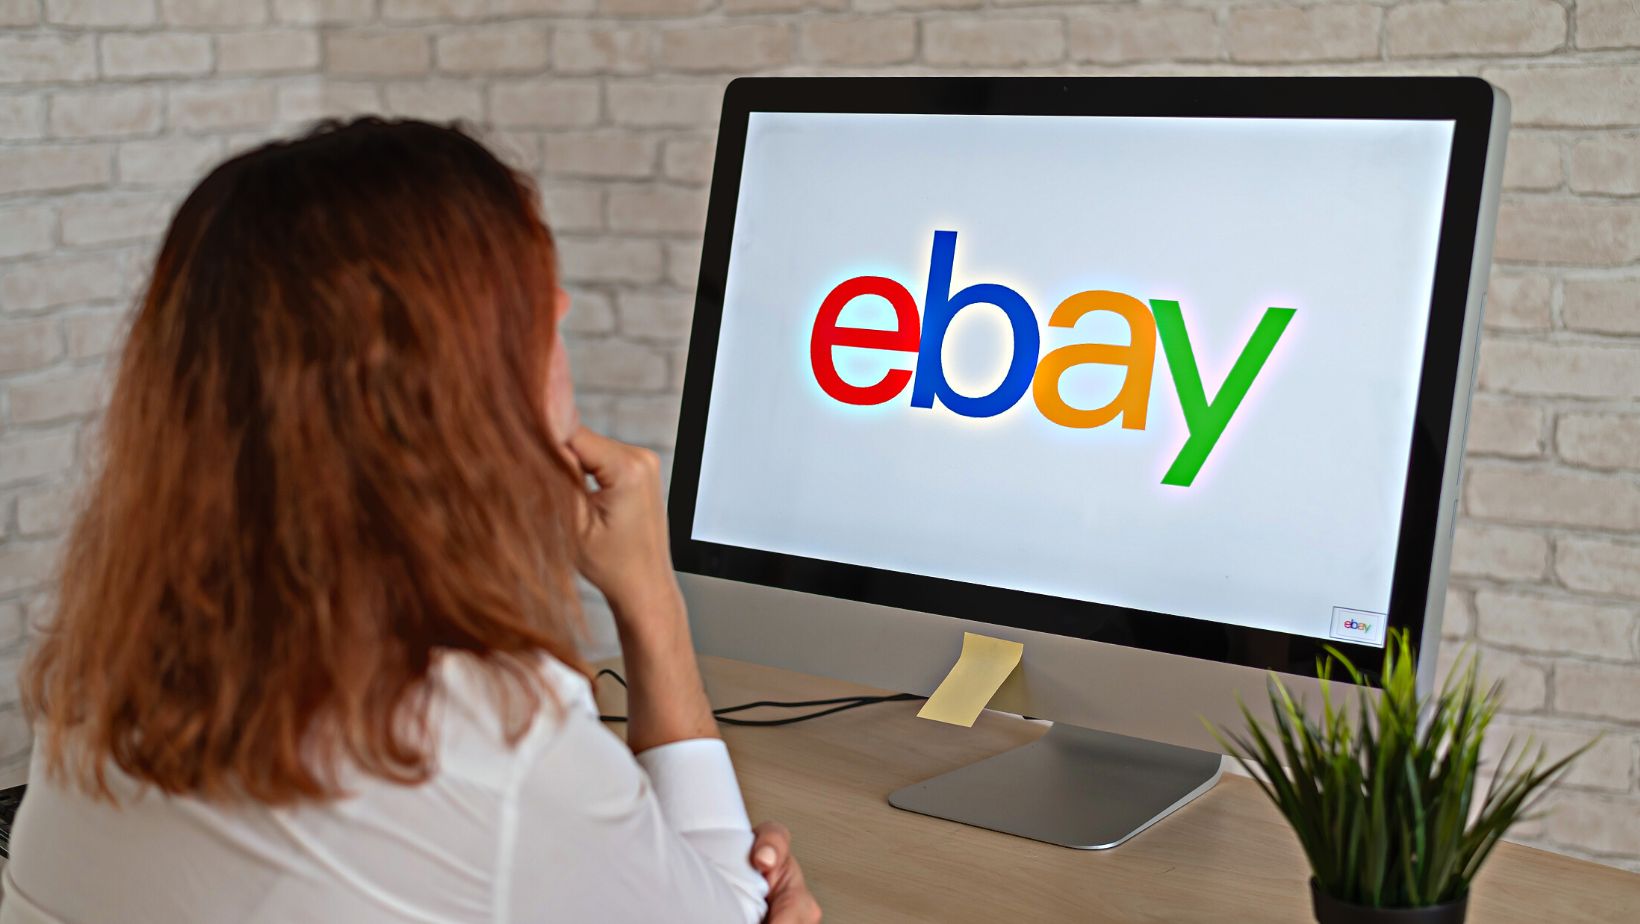 ebay customer service number